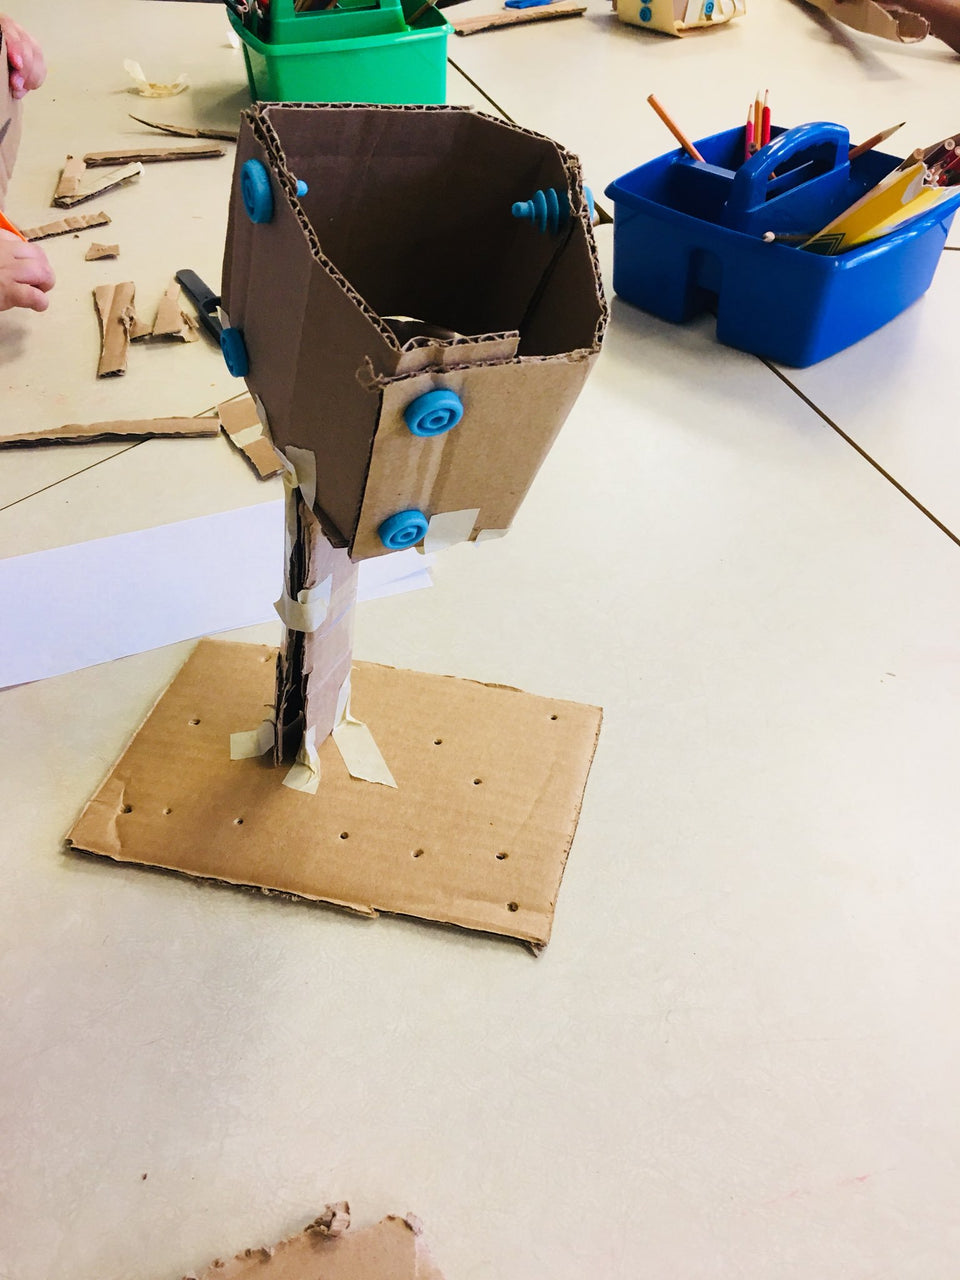 Cardboard bird nest grade school challenge made with Makedo construction system